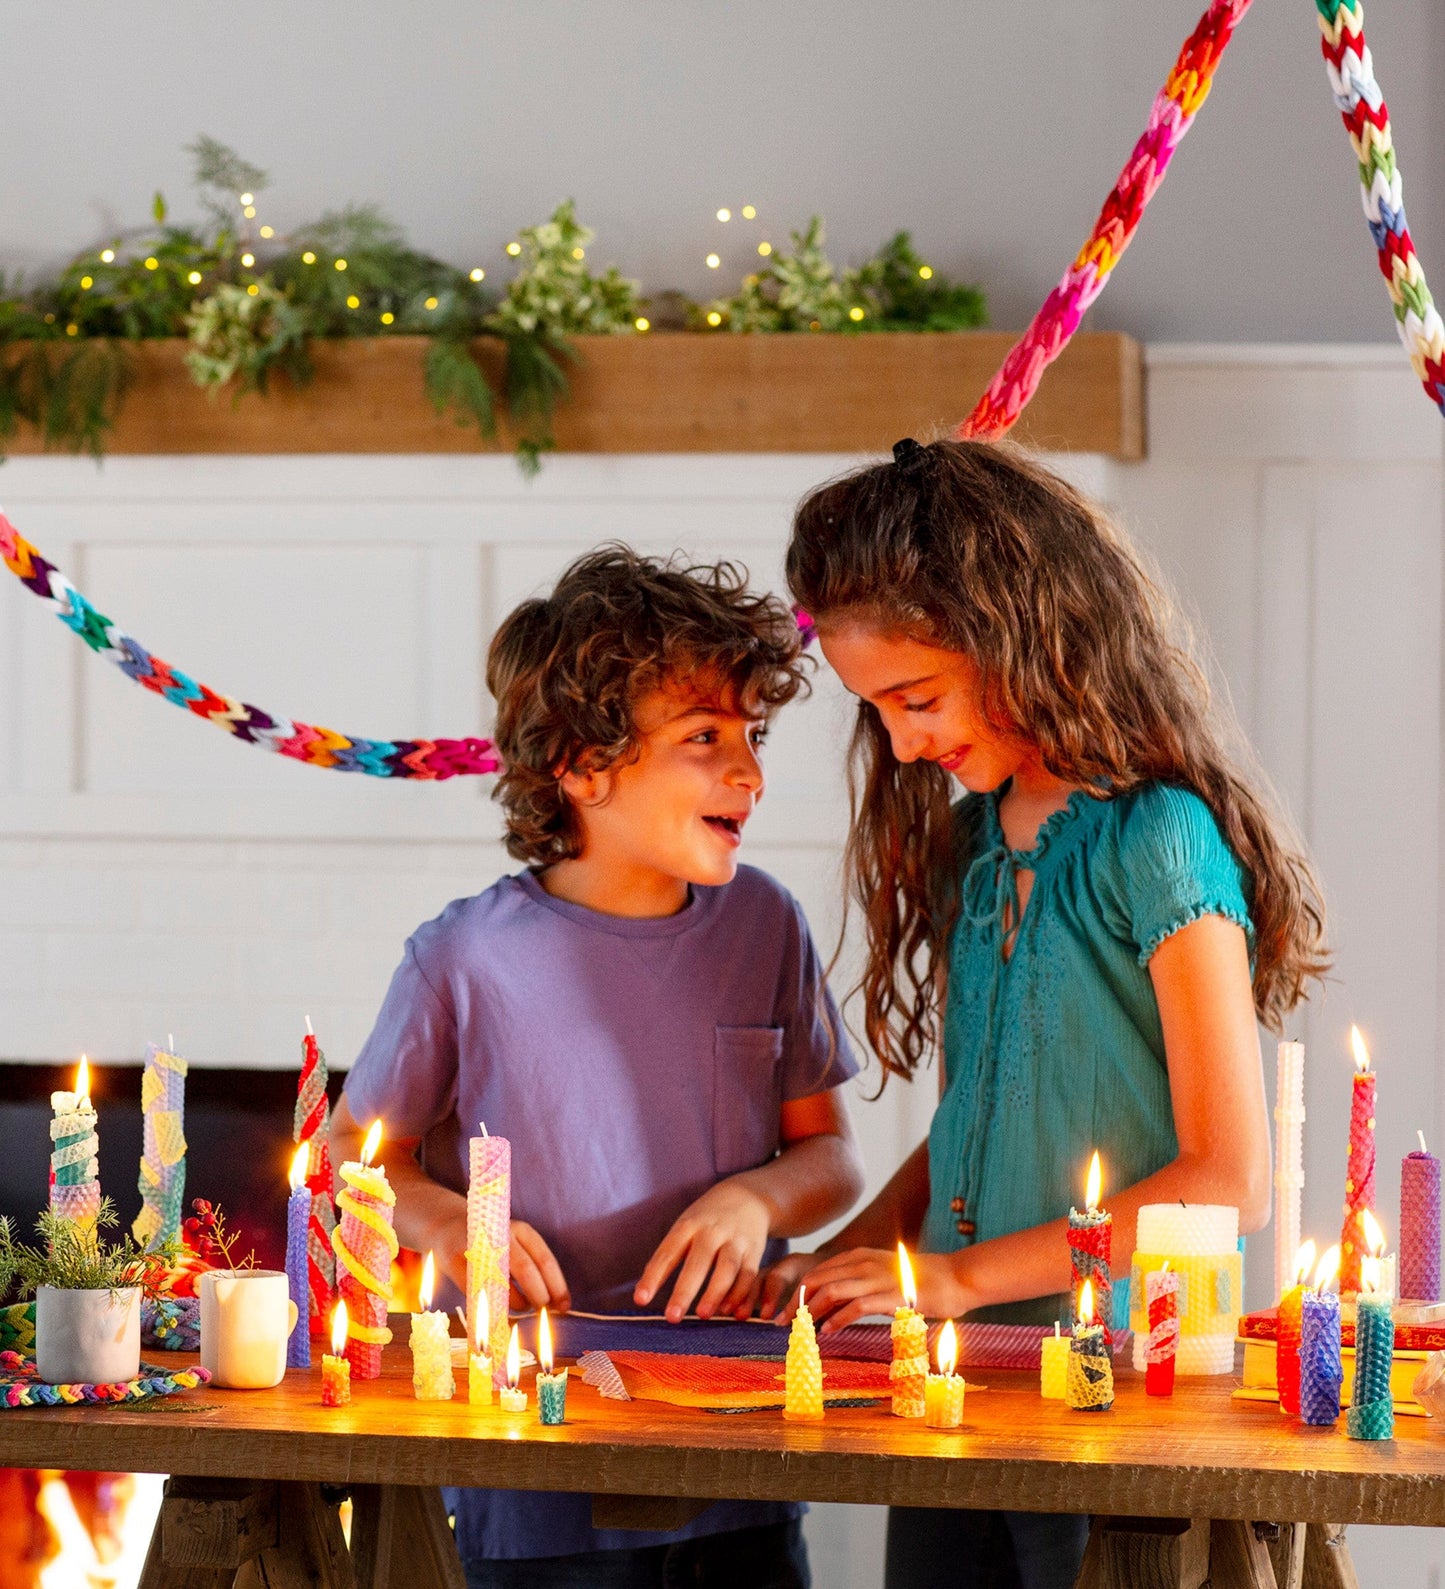 Christmas Candles, Candle Making Kit, Christmas Kids Craft, Holiday Decor